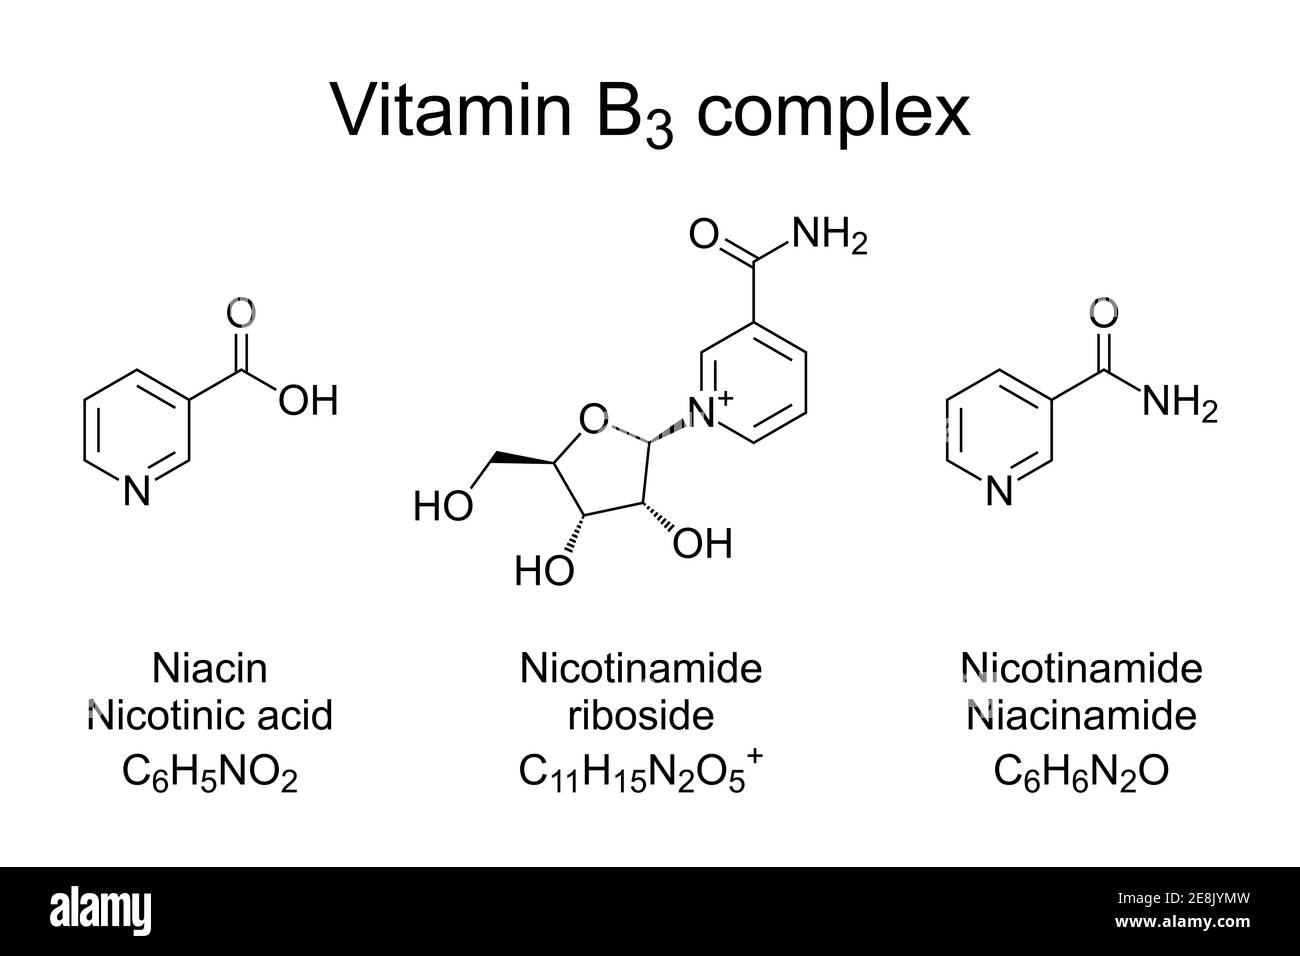 Vitamin B3 complex, chemical formulas. Nicotinamide, niacin and nicotinamide riboside, the three vitamers of the vitamin B3. Stock Photo